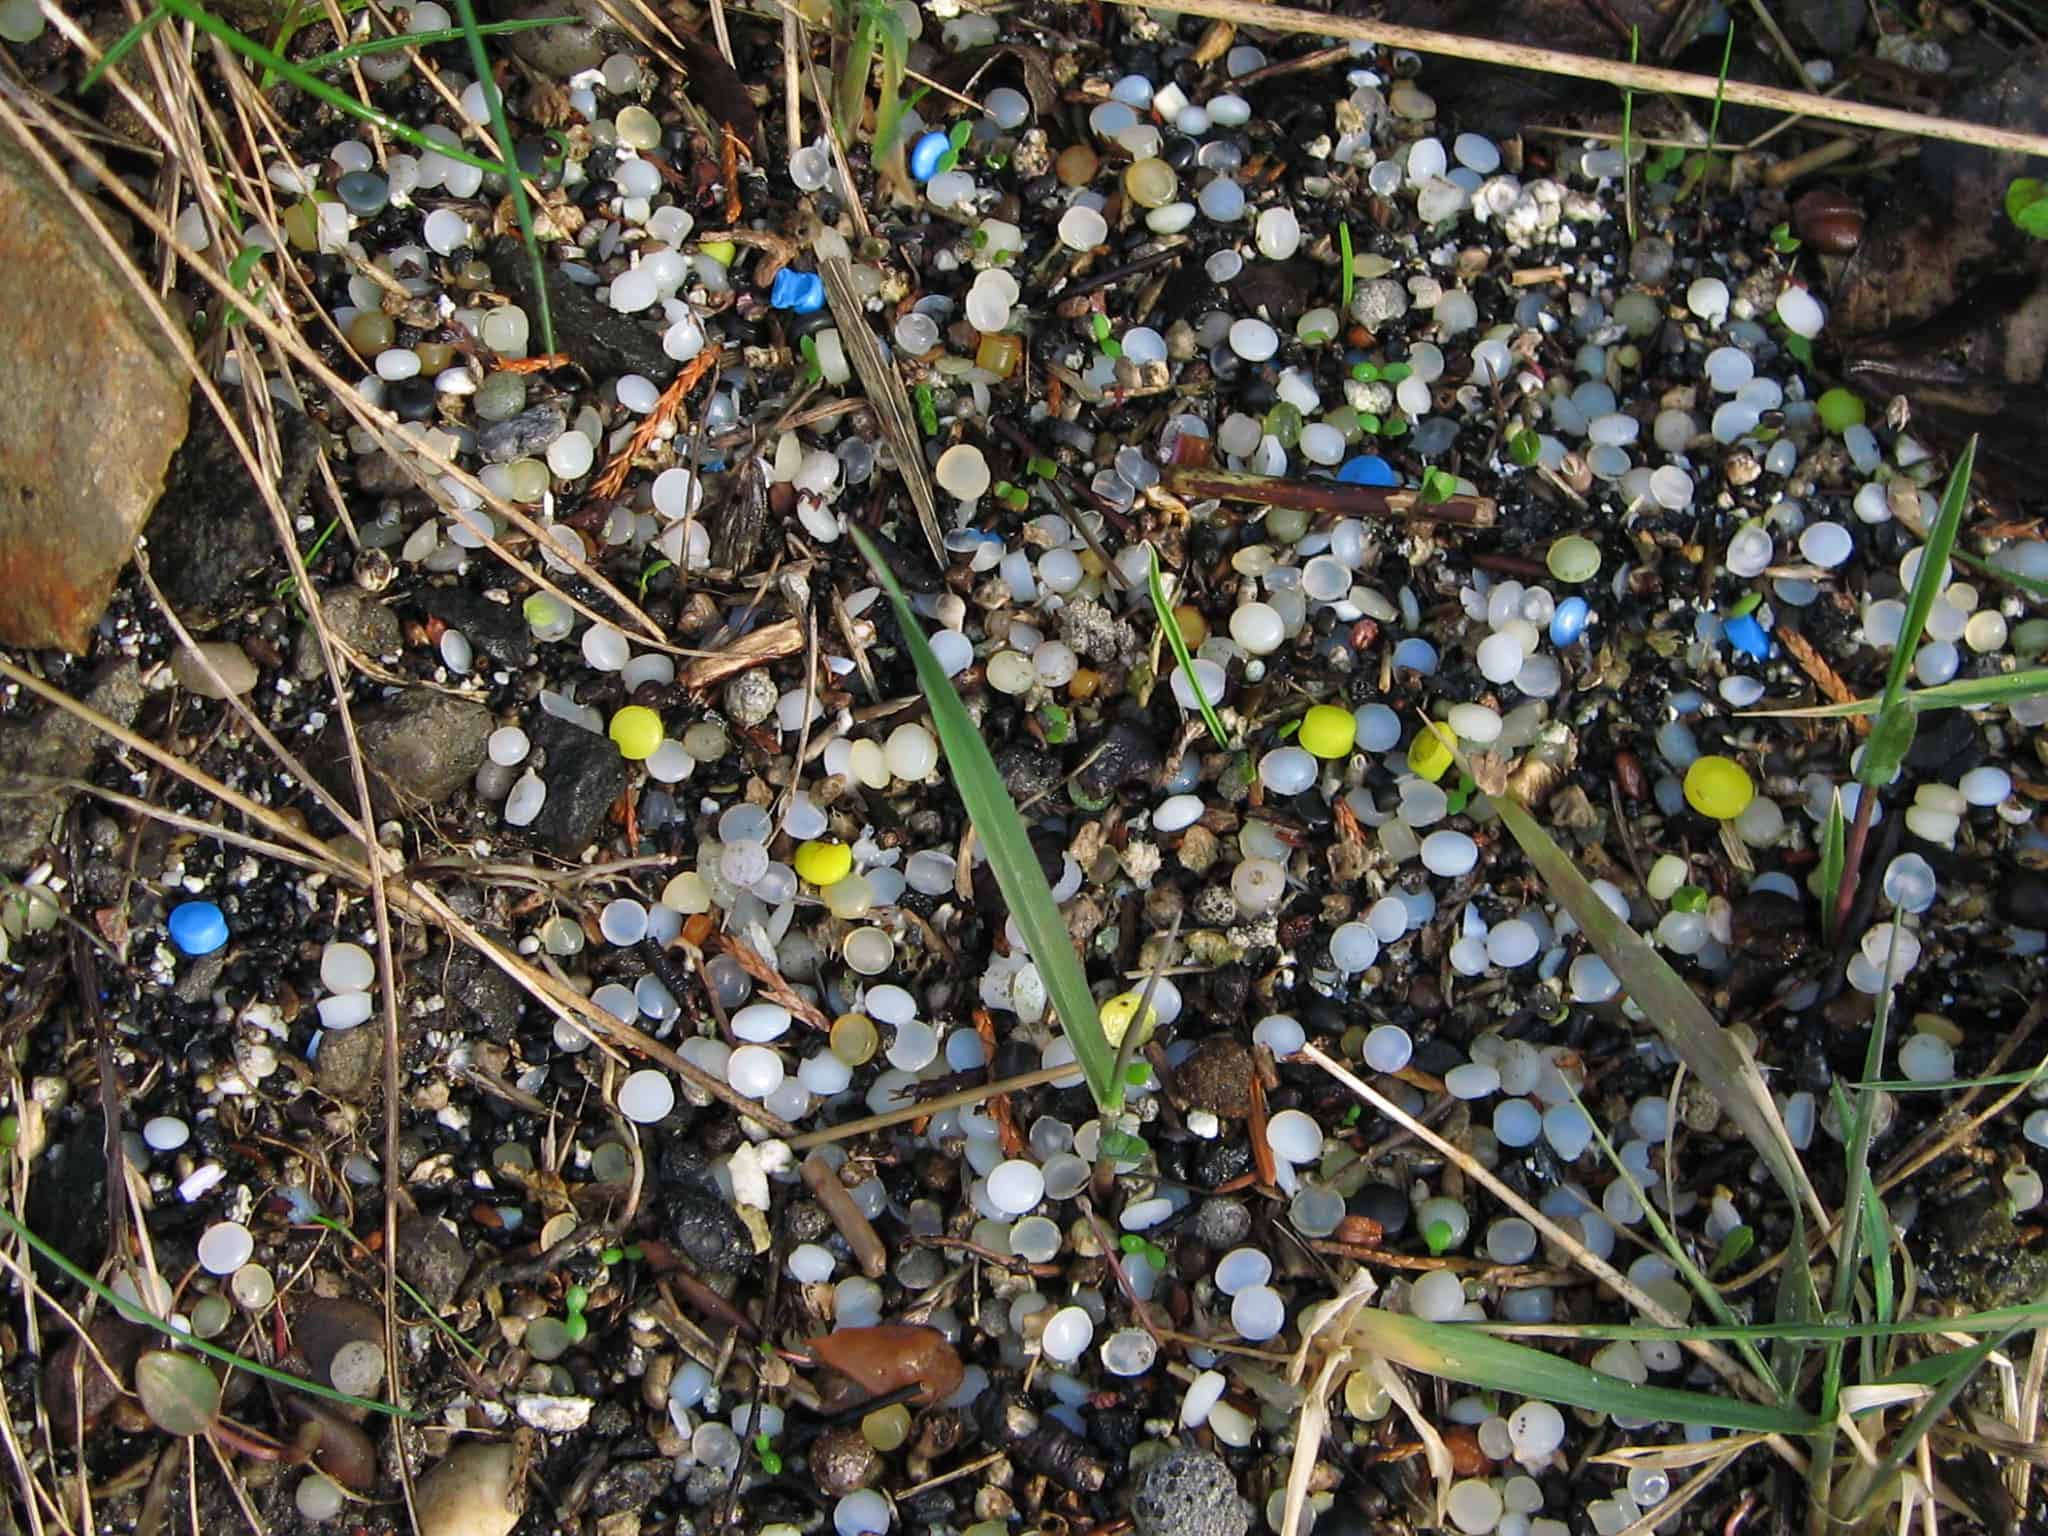 Nurdles - small plastic pellets - on the beach